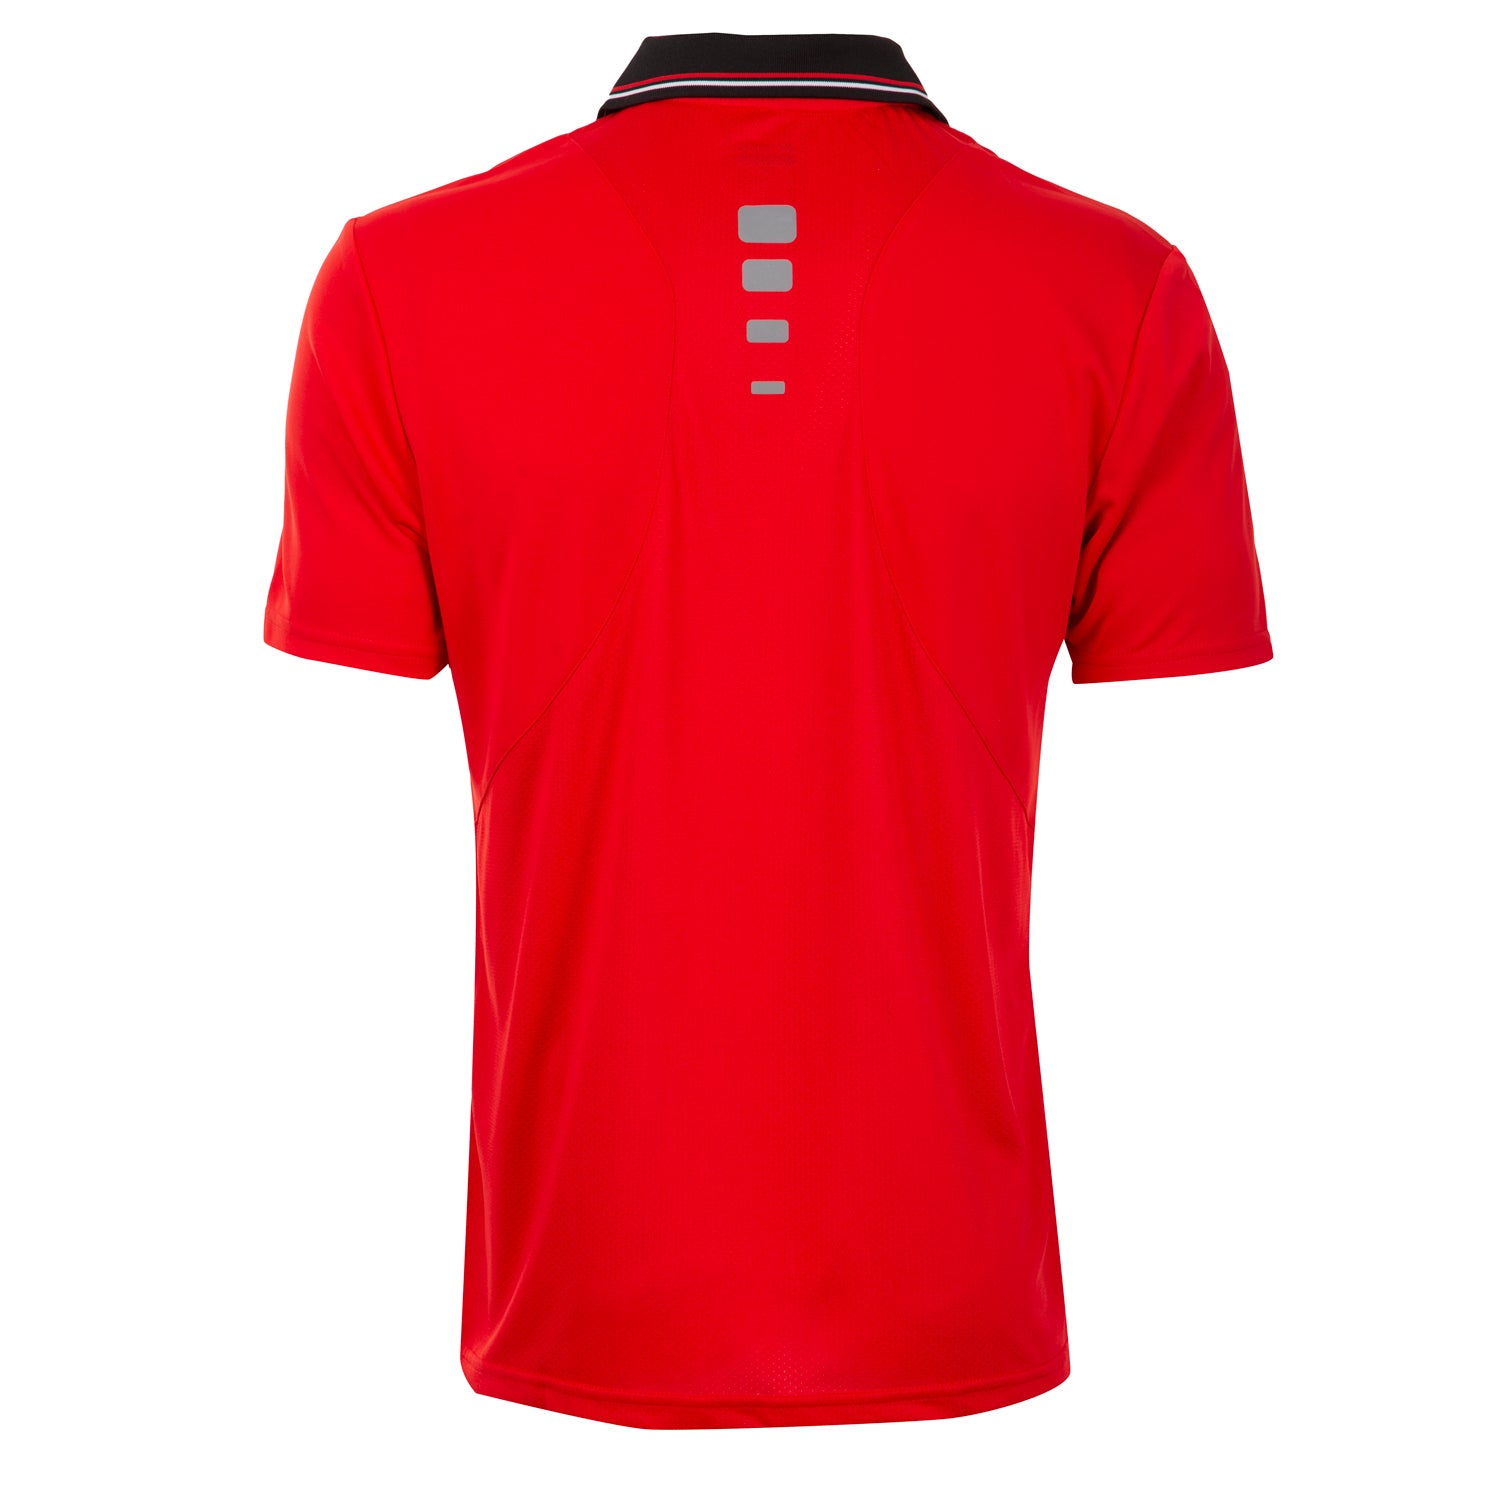 Yonex 1715 Junior Badminton Polo T Shirt - Best Price online Prokicksports.com